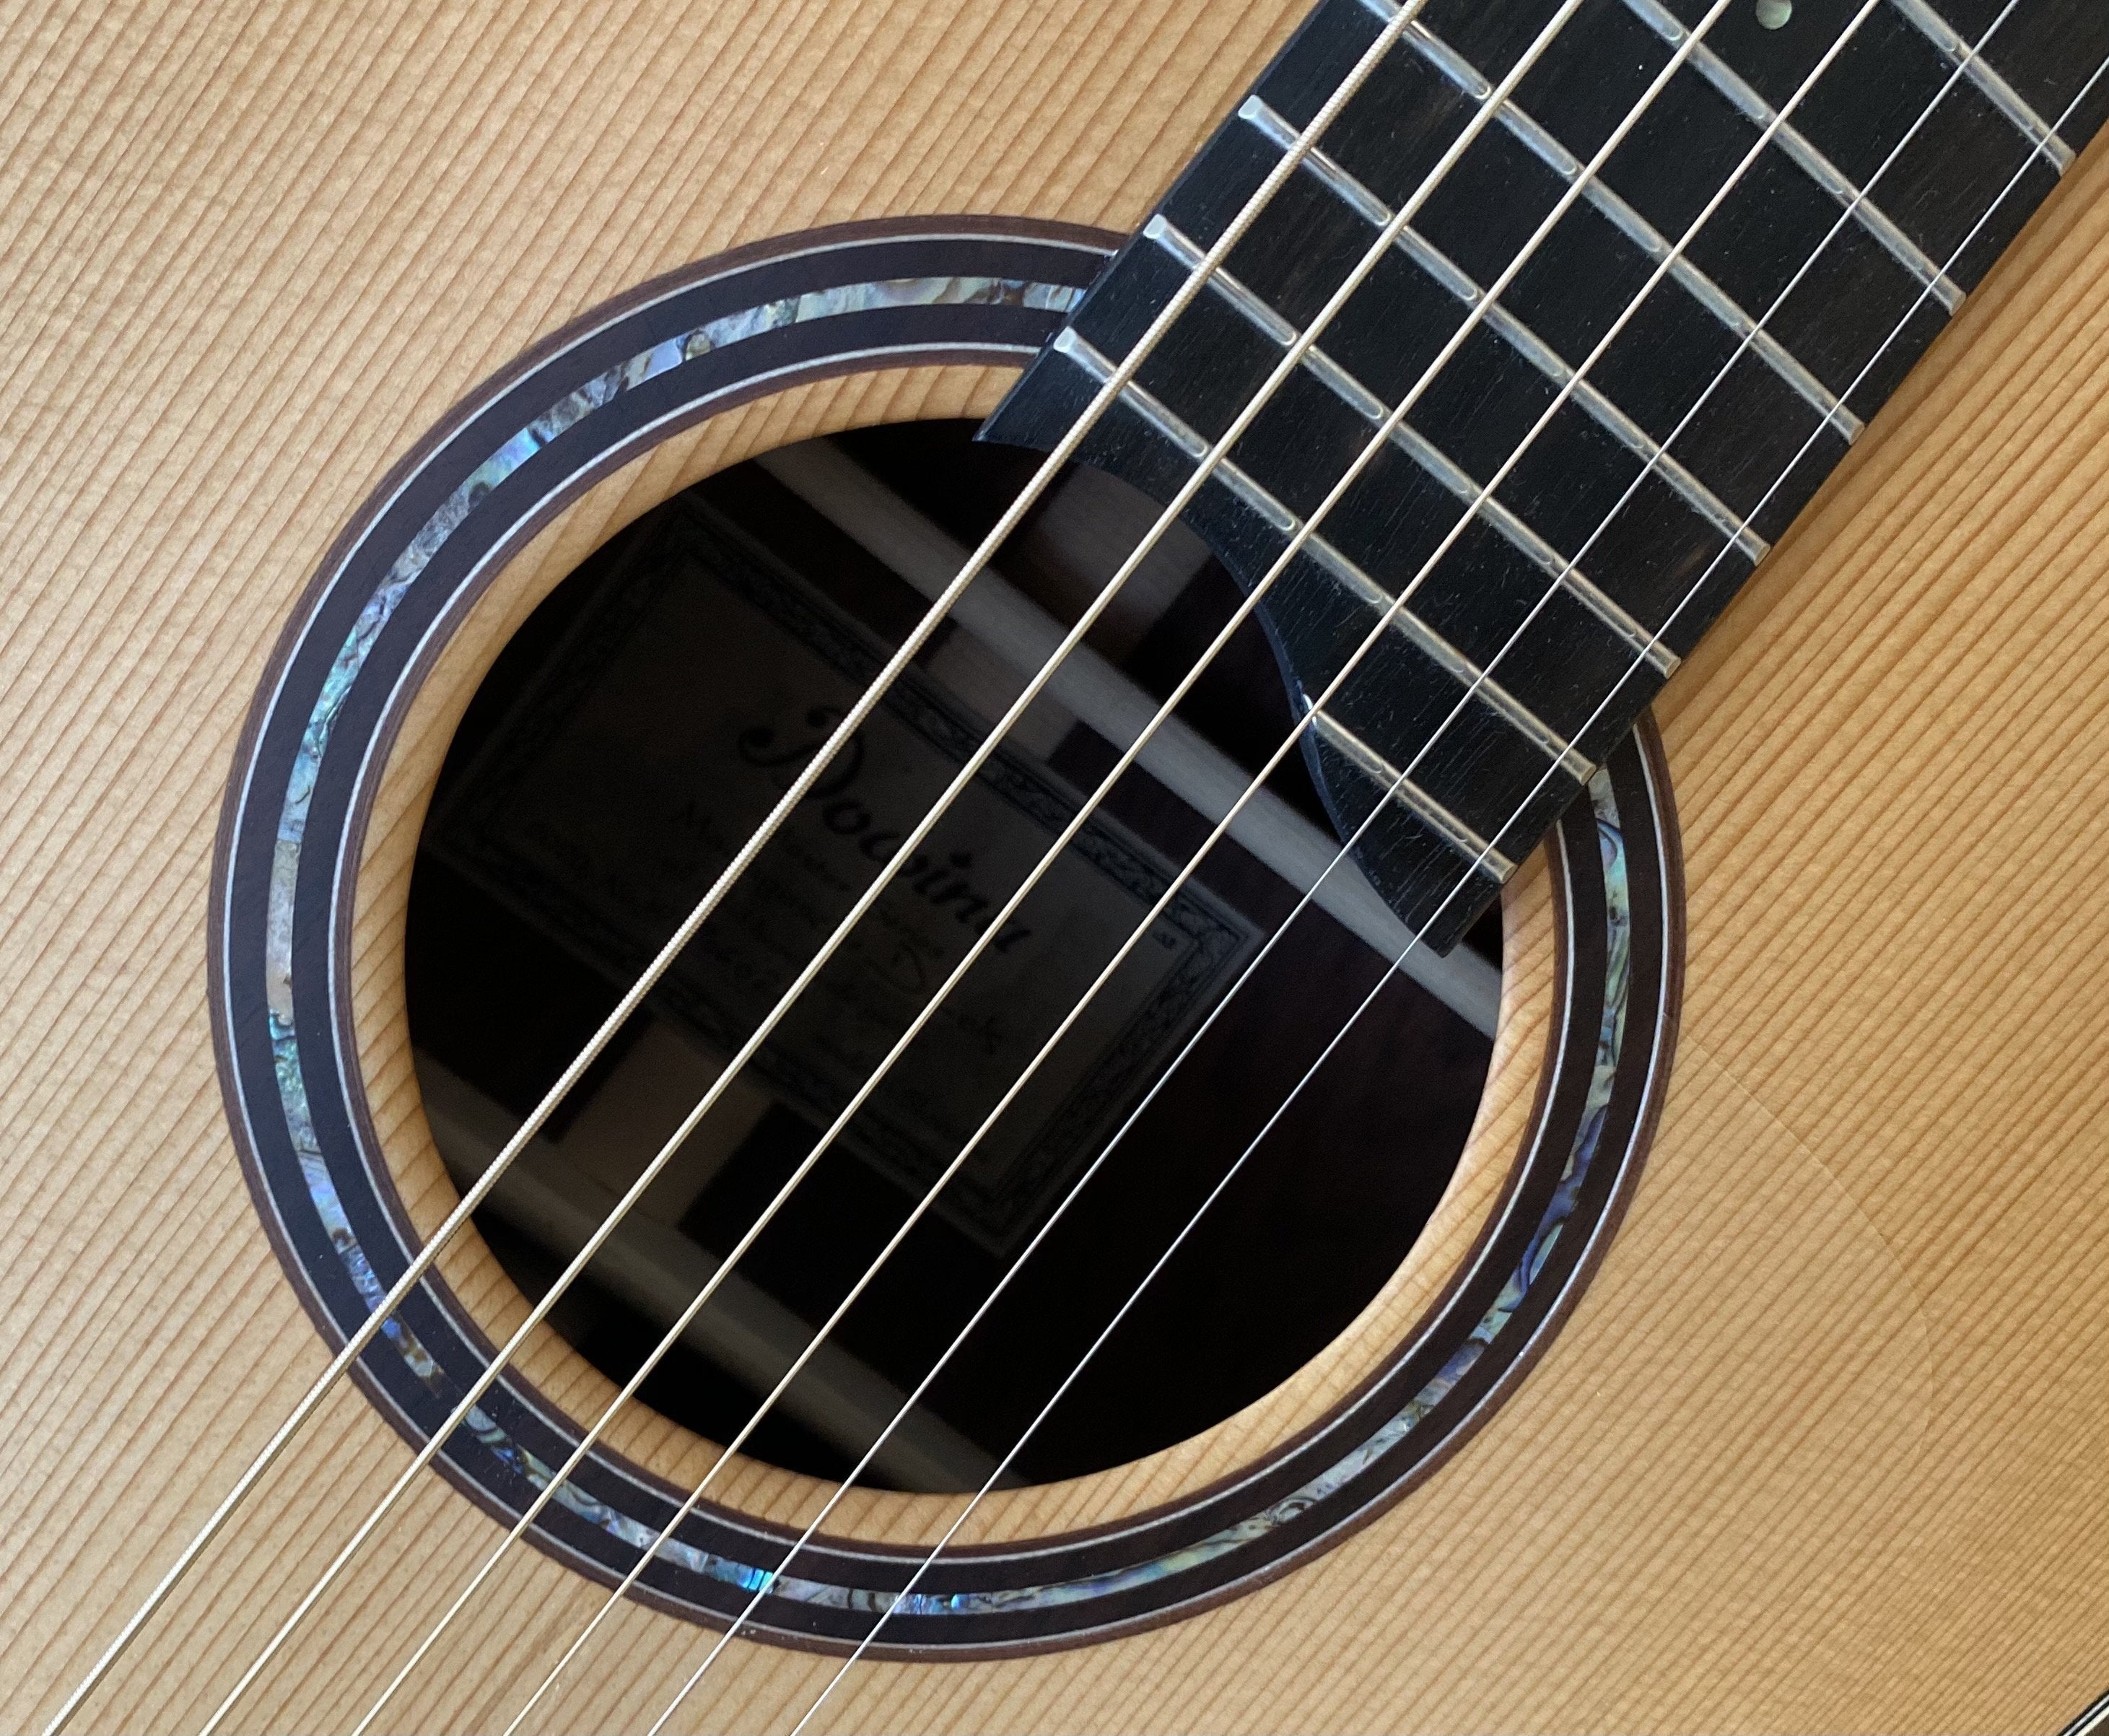 Dowina Master Build Madagascar Rosewood 1 of 6, Acoustic Guitar for sale at Richards Guitars.